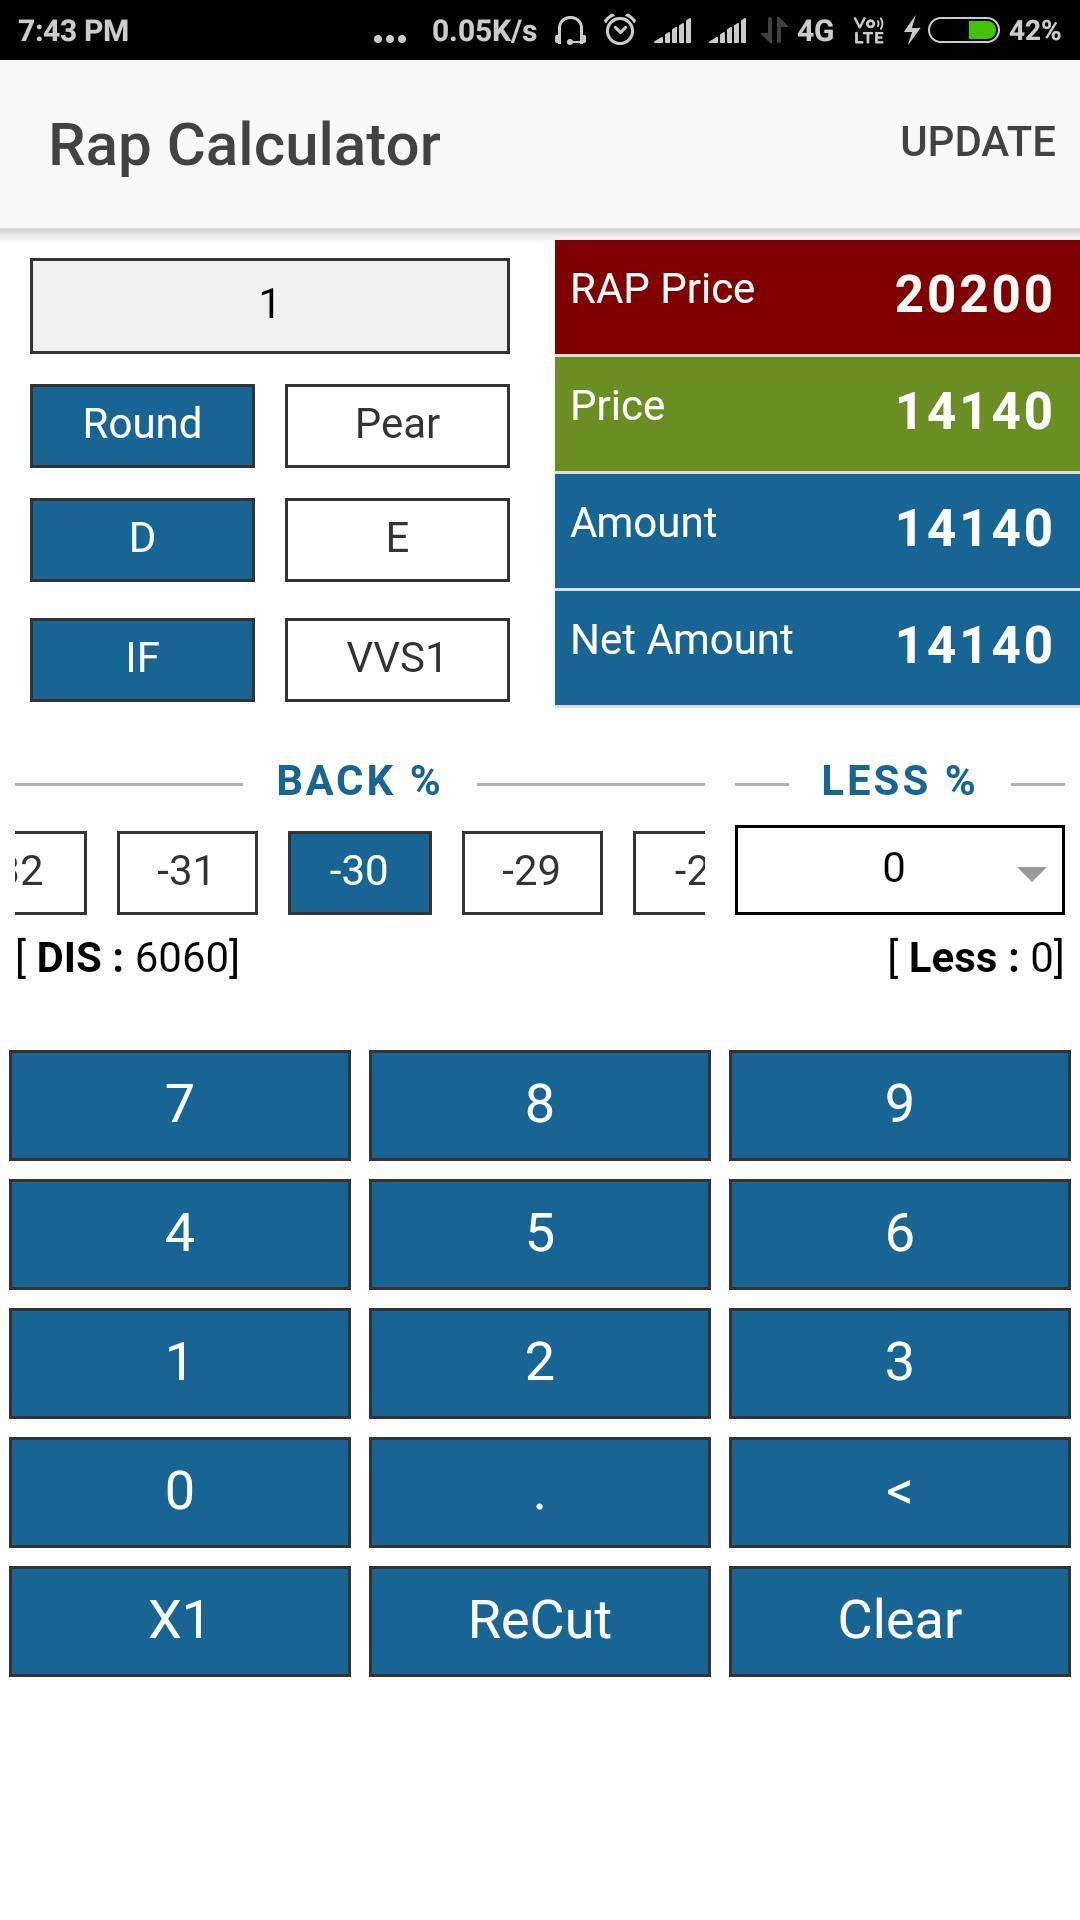 Rap Calc Rap Price Calculator For Android Apk Download - roblox rap calculator